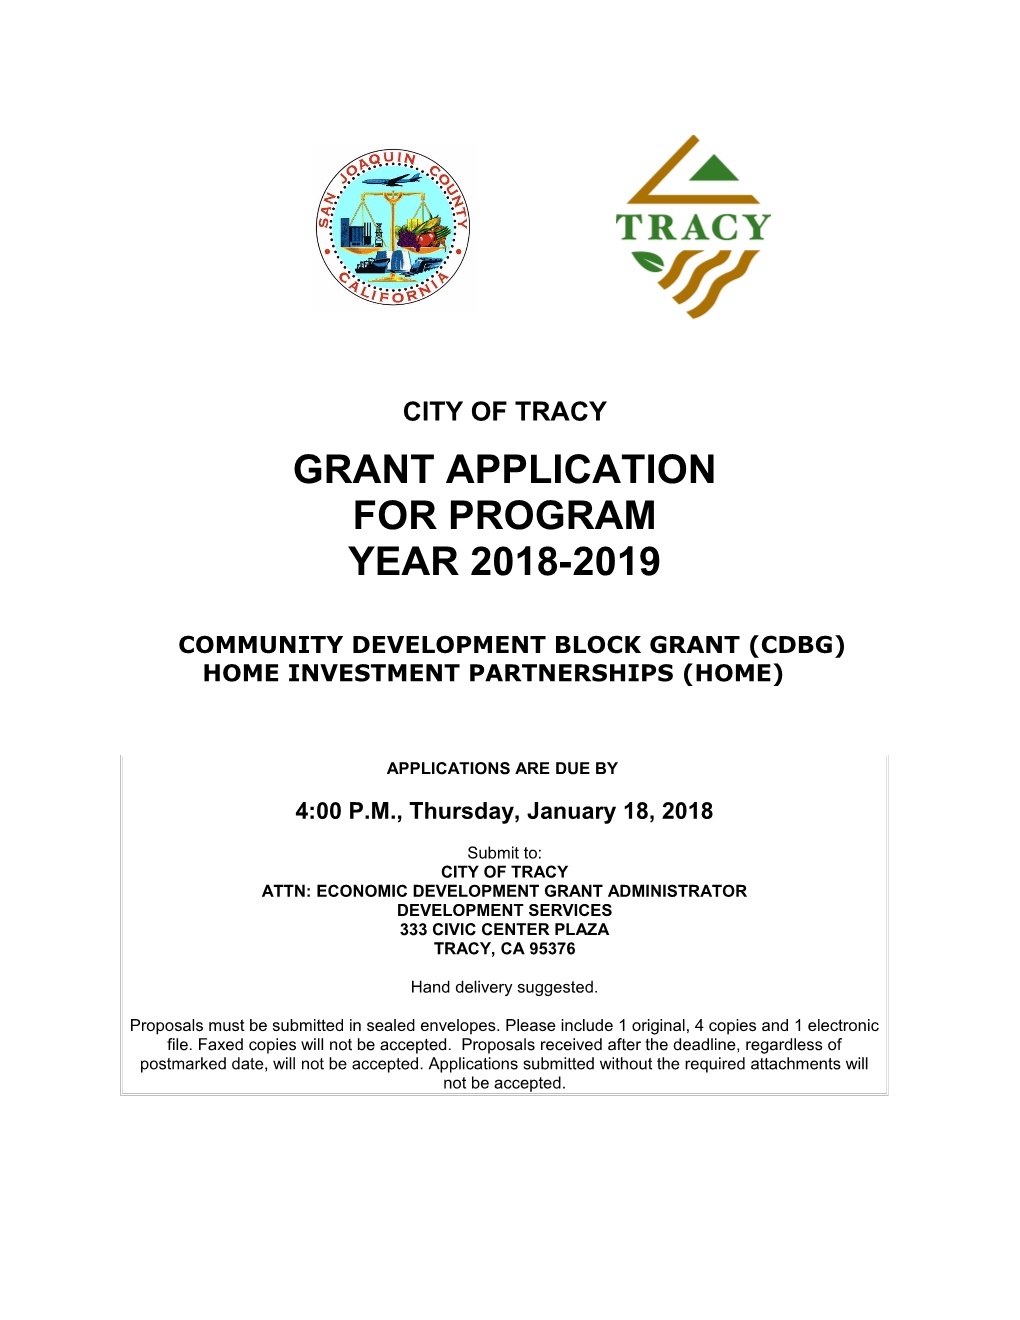 San Joaquin County Funding Application for Program Year 2018-19